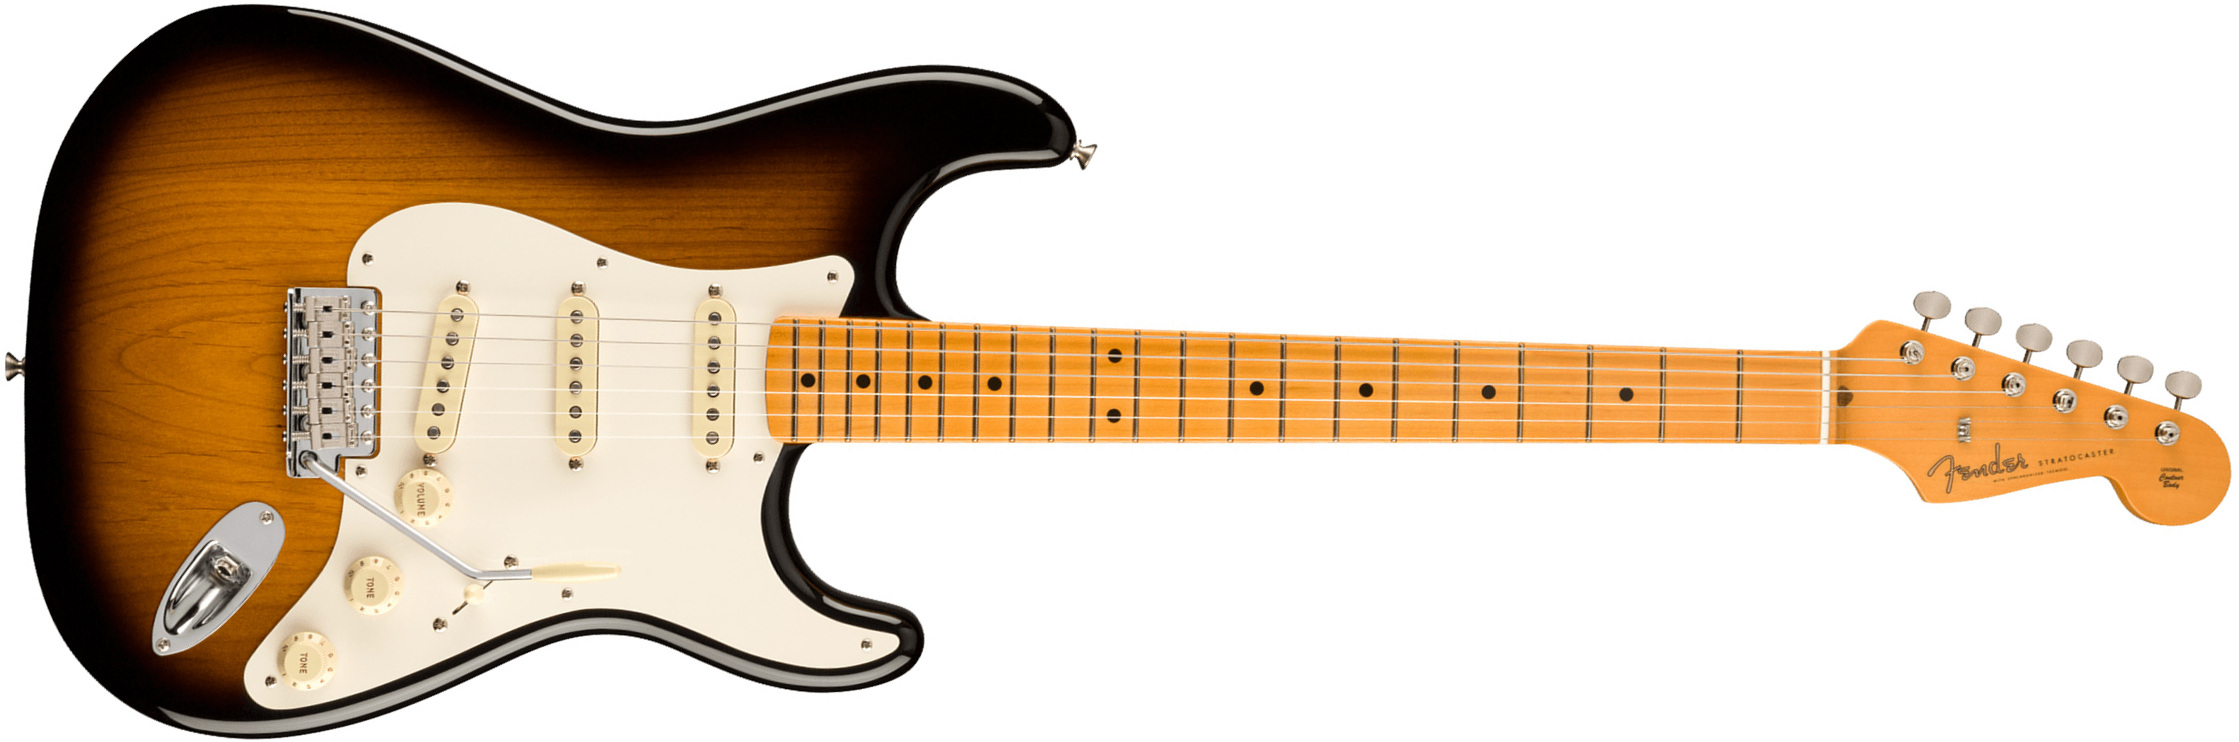 Fender Strat 1957 American Vintage Ii Usa 3s Trem Mn - 2-color Sunburst - Guitare Électrique Forme Str - Main picture